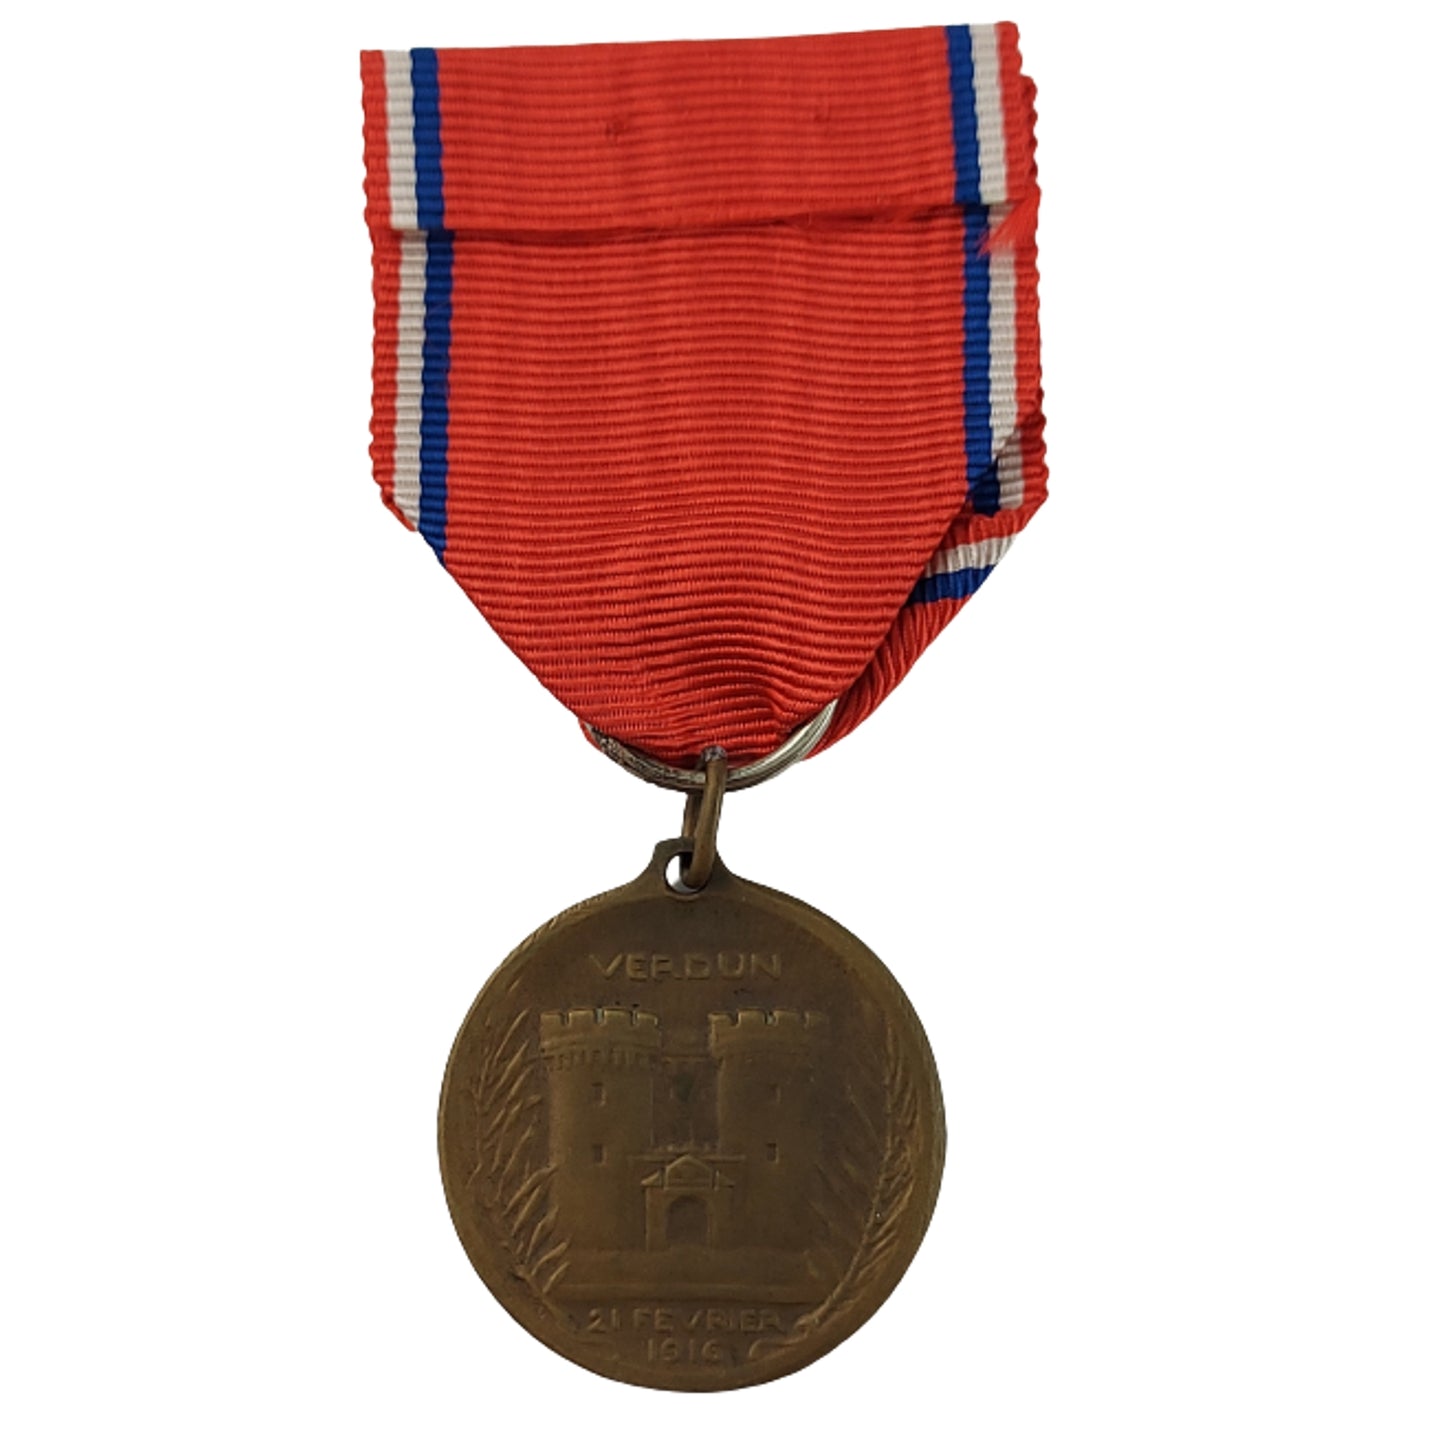 WW1 French Verdun Medal 1916.